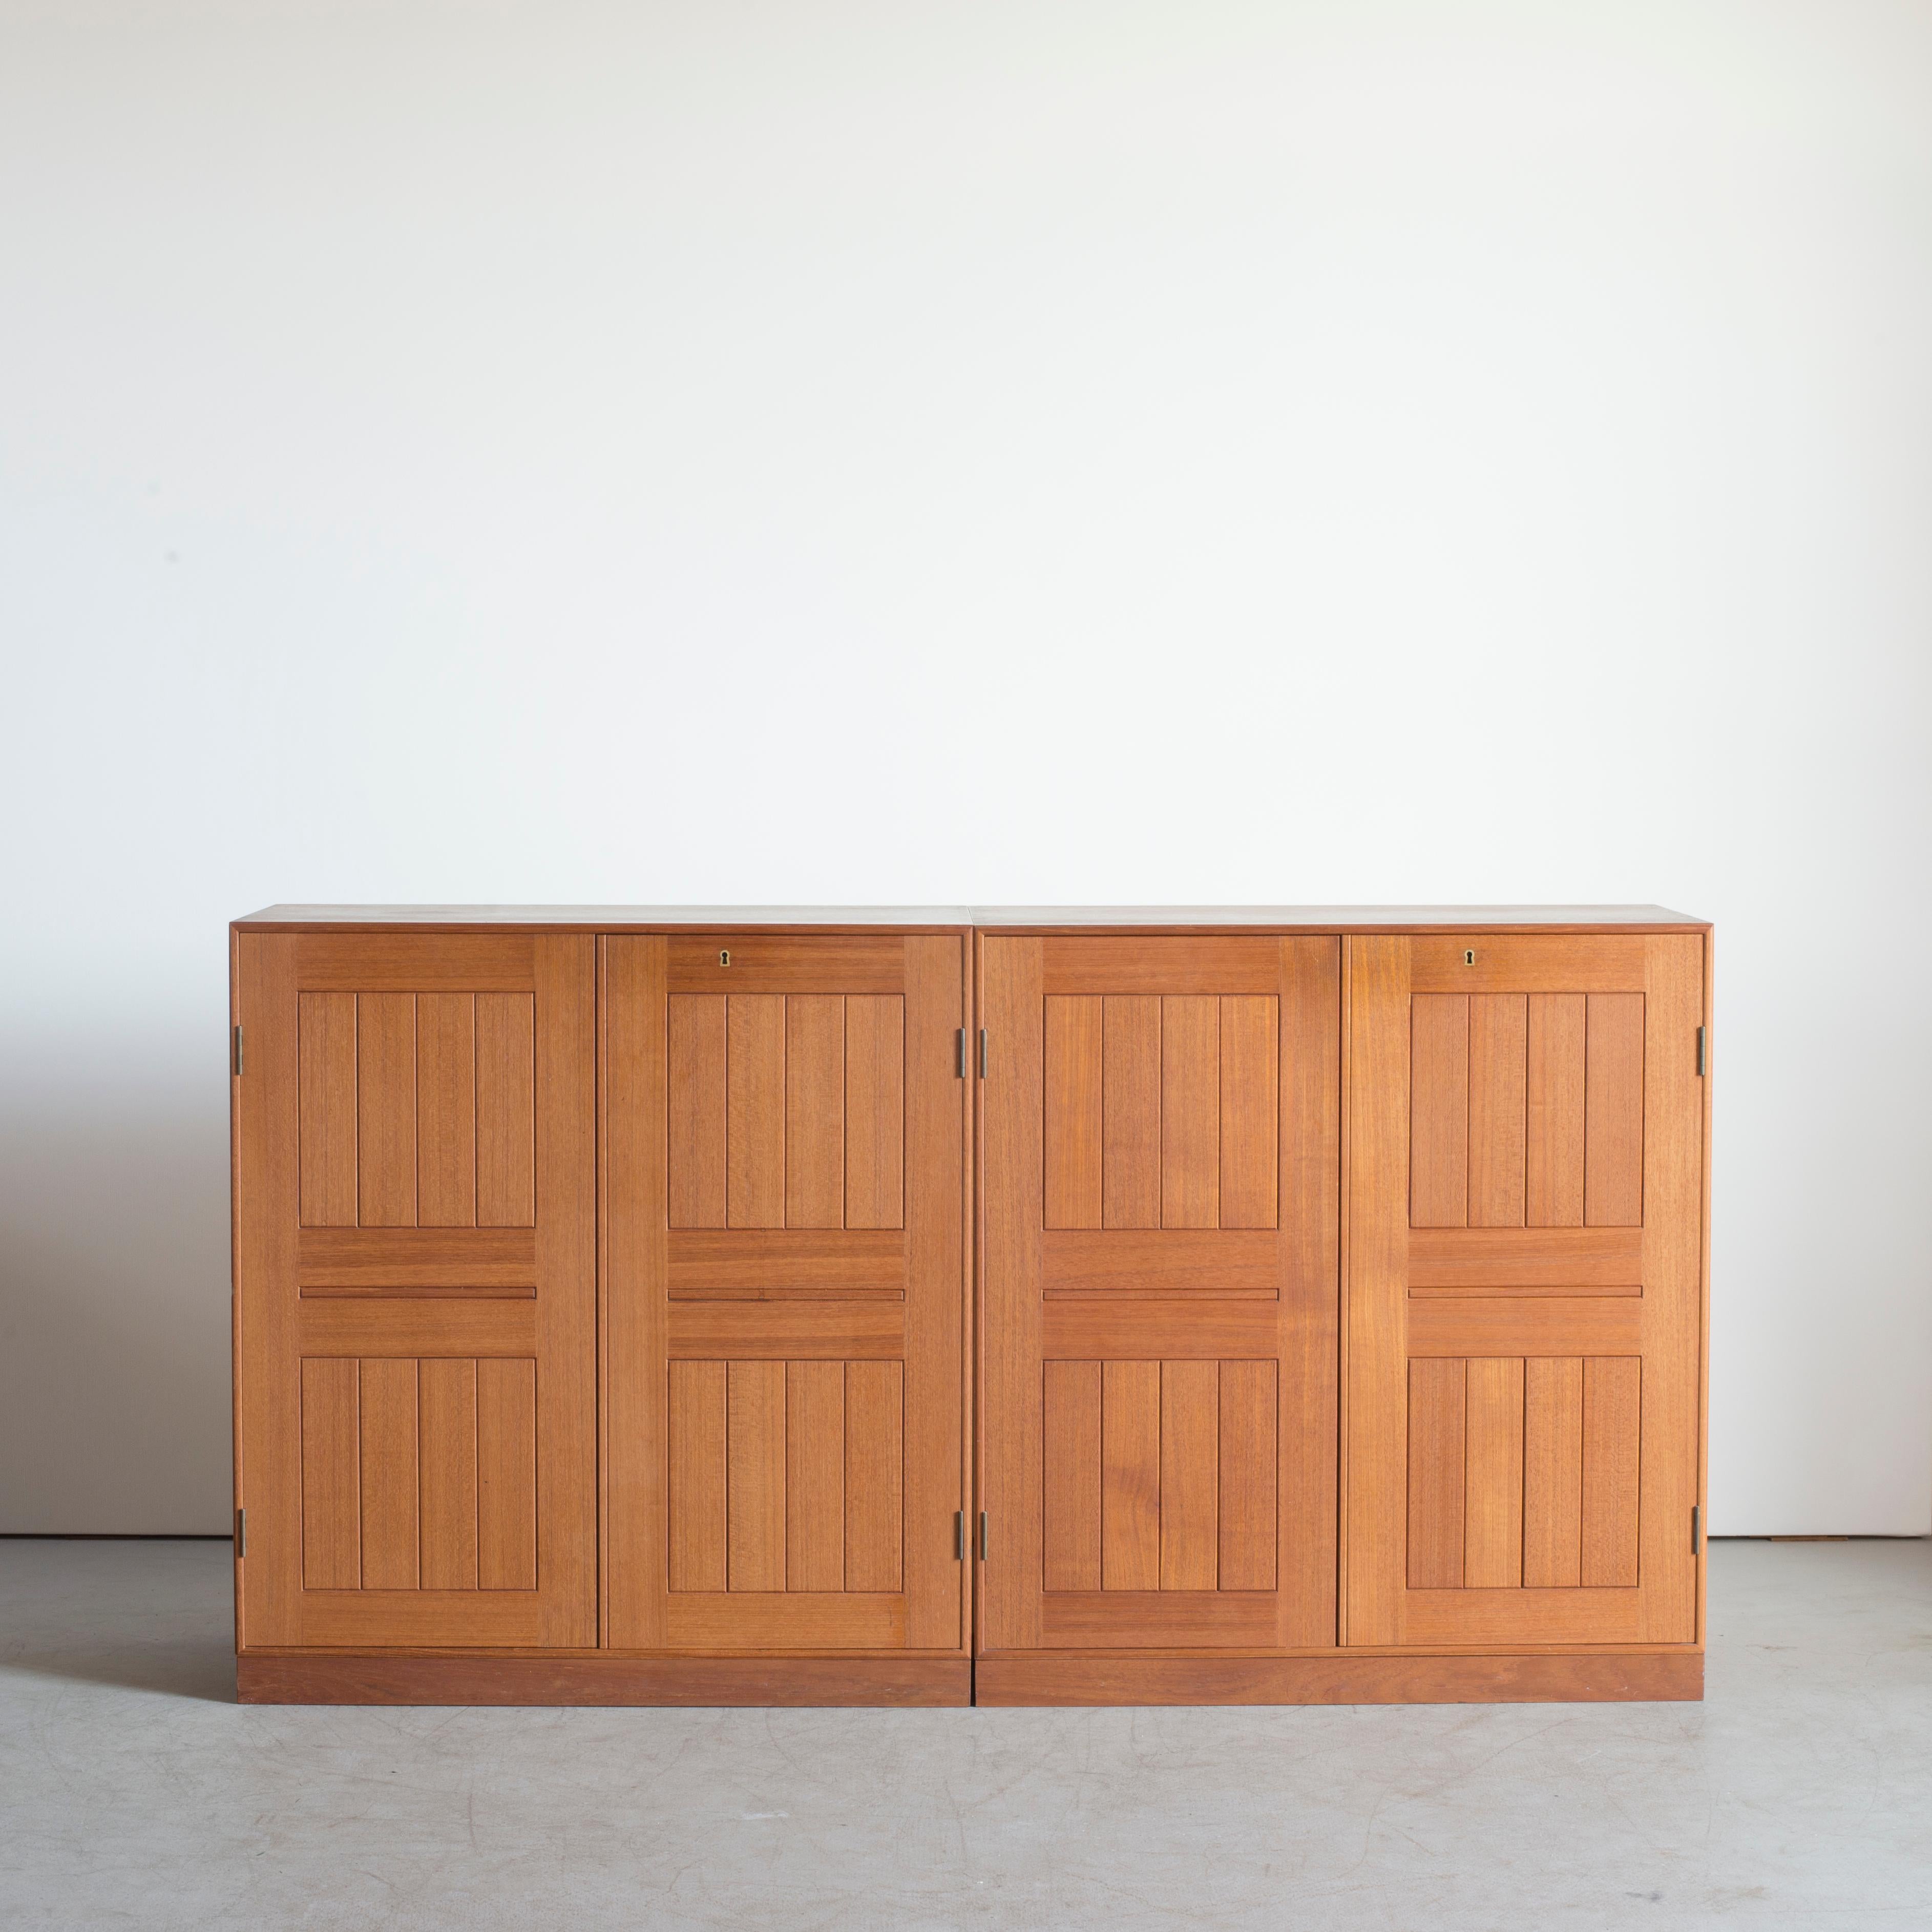 Mogens Koch cabinets in Teak with bases, inside drawers of Maple. Executed by Rud. Rasmussen.

Reverse with paper labels ‘RUD. RASMUSSENS/SNEDKERIER/KØBENHAVN/DENMARK